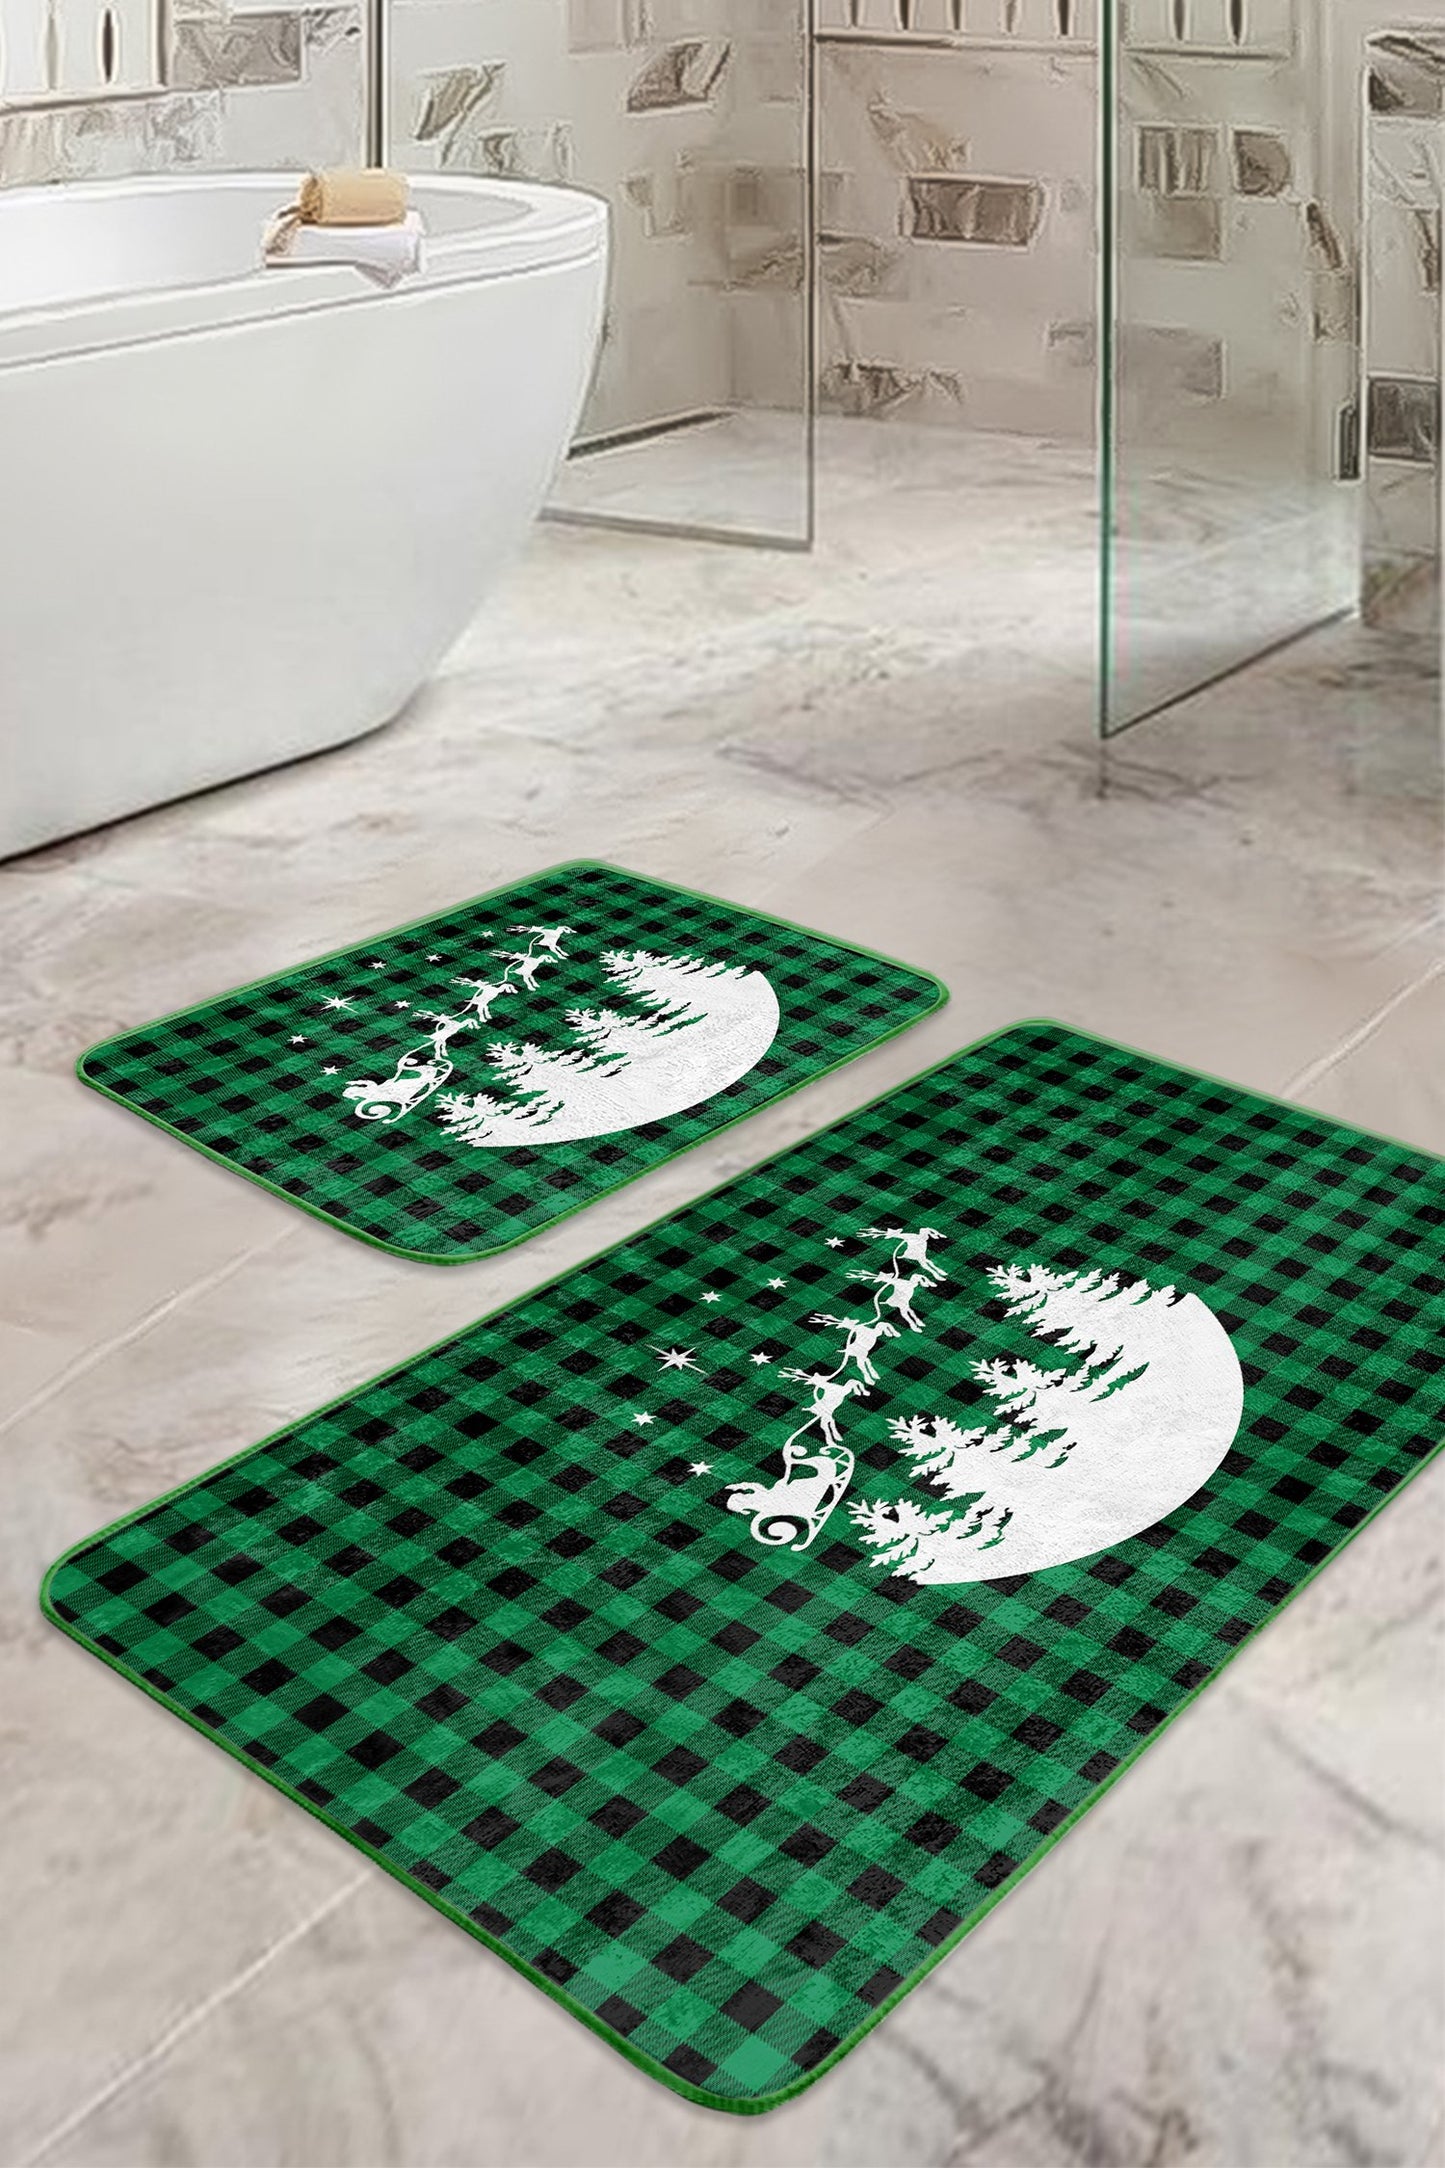 Functional and Stylish Bath Mat Set with Green Christmas Craftsmanship